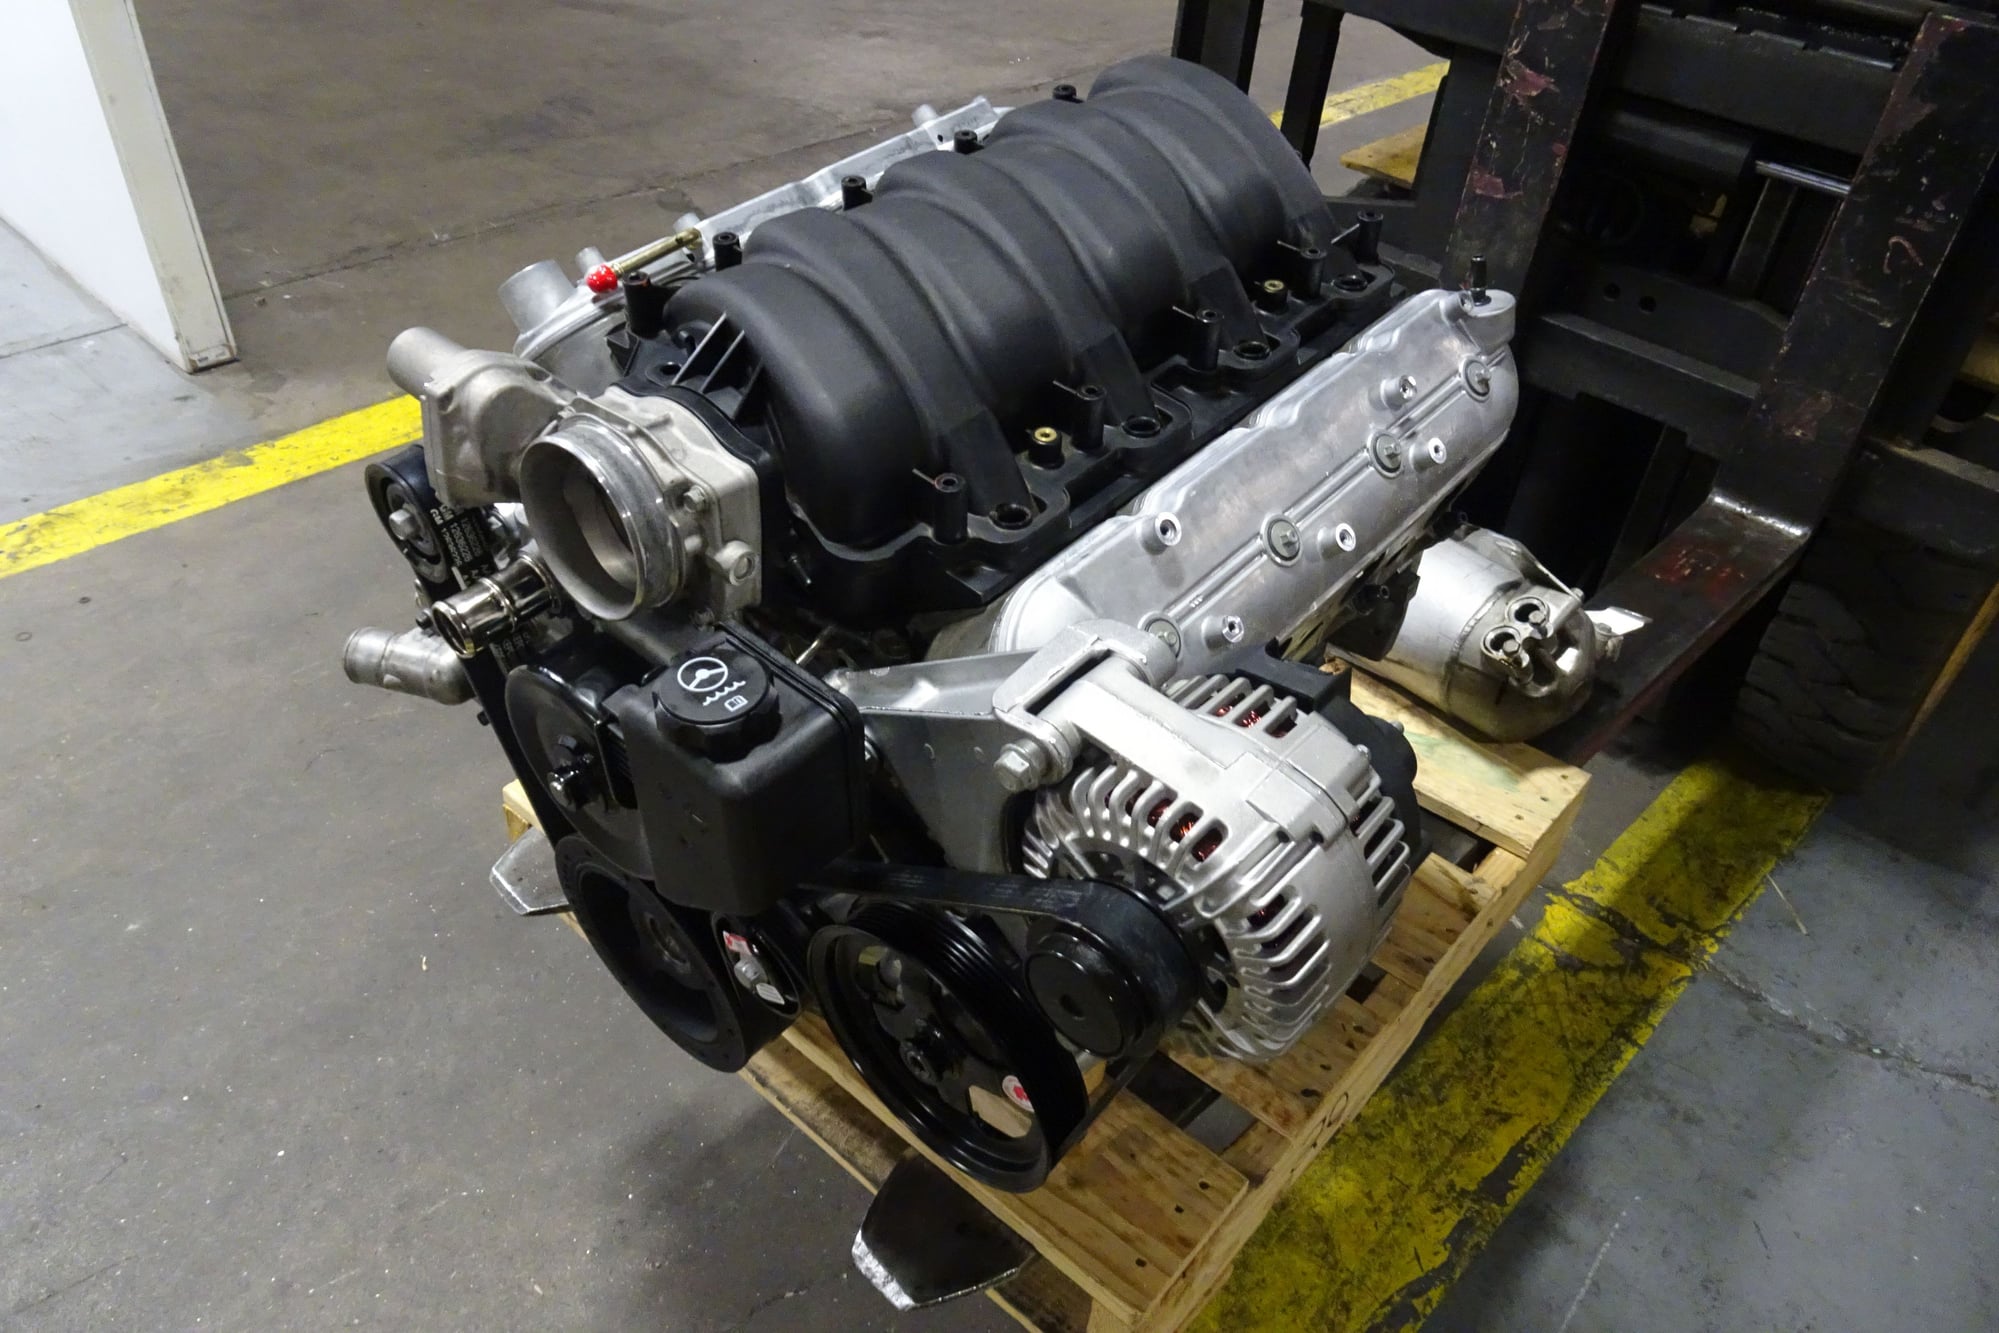  - LS7 447 Stroker Engine W/ Accessories NEW - Crete, NE 68333, United States